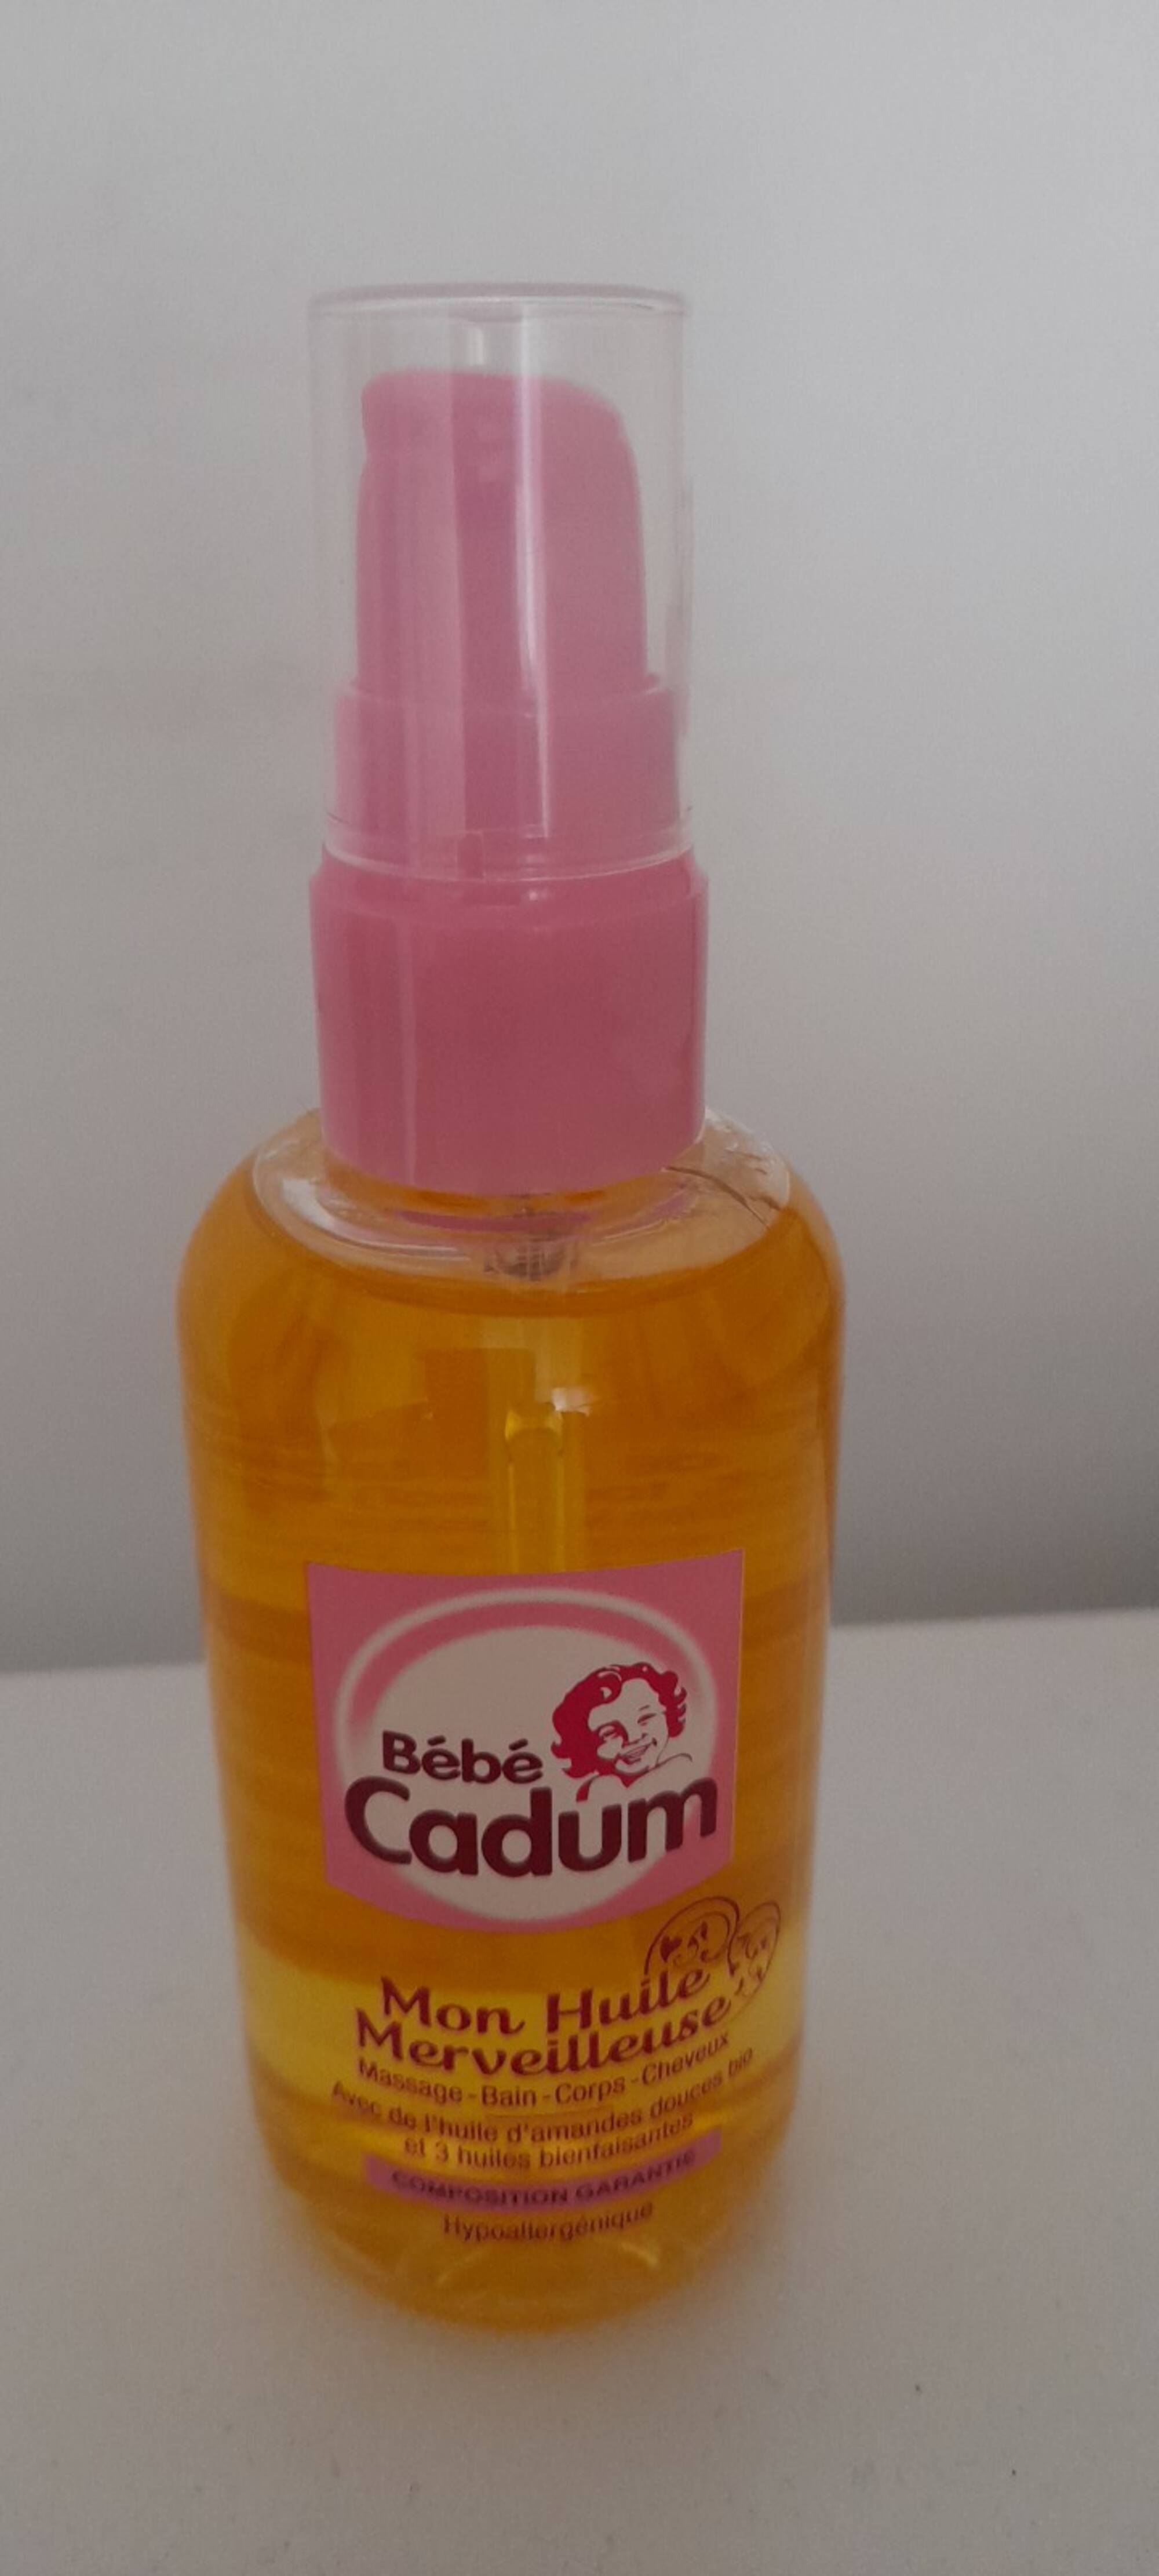 CADUM - Bébé - Mon huile merveilleuse